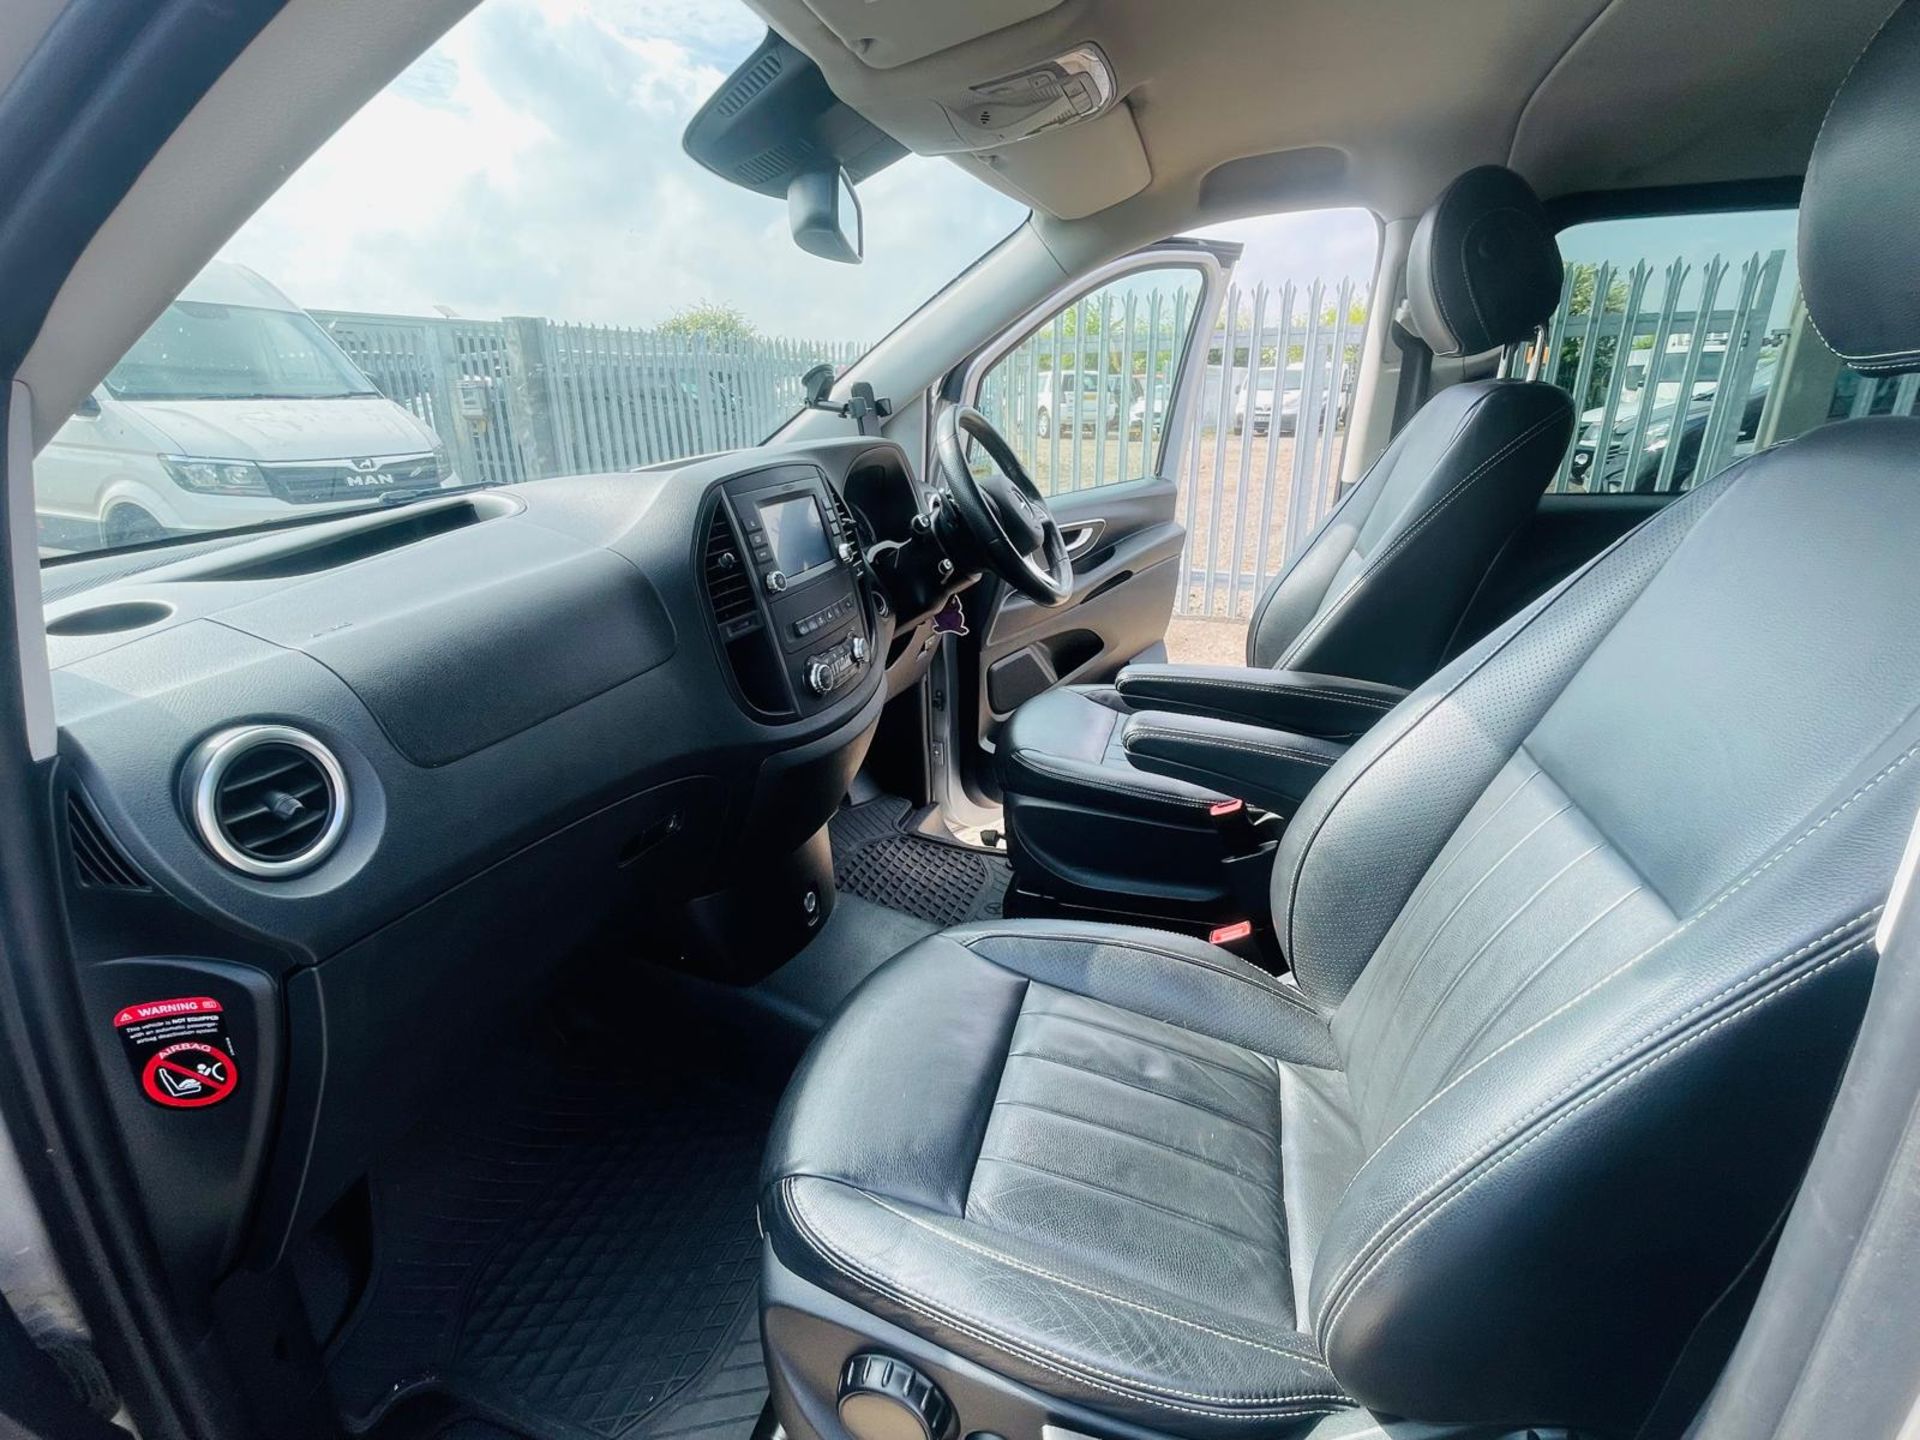 Mercedes-Benz Vito Premium 2.1 119 CDI 7G Tronic Crew Cab LWB Automatic 2019'19 Reg'- Alloy Wheels - Image 23 of 31